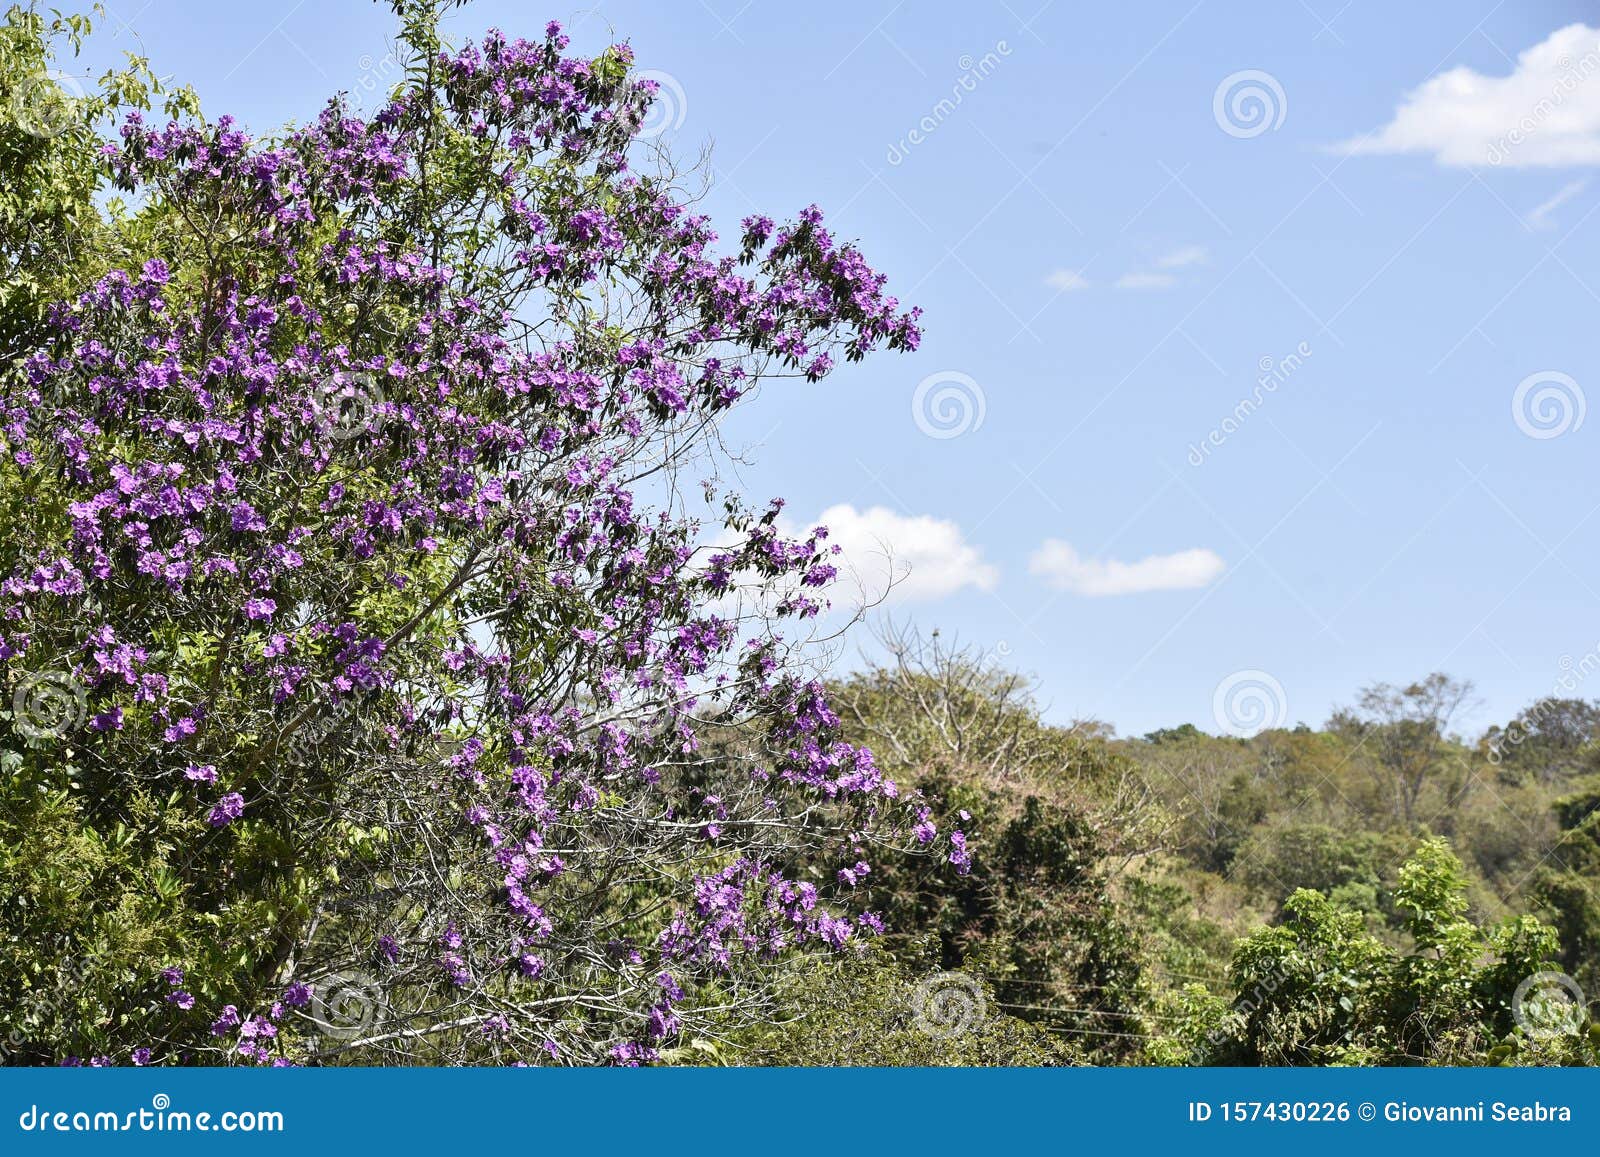 flowers in the field, landscape, nature brazil